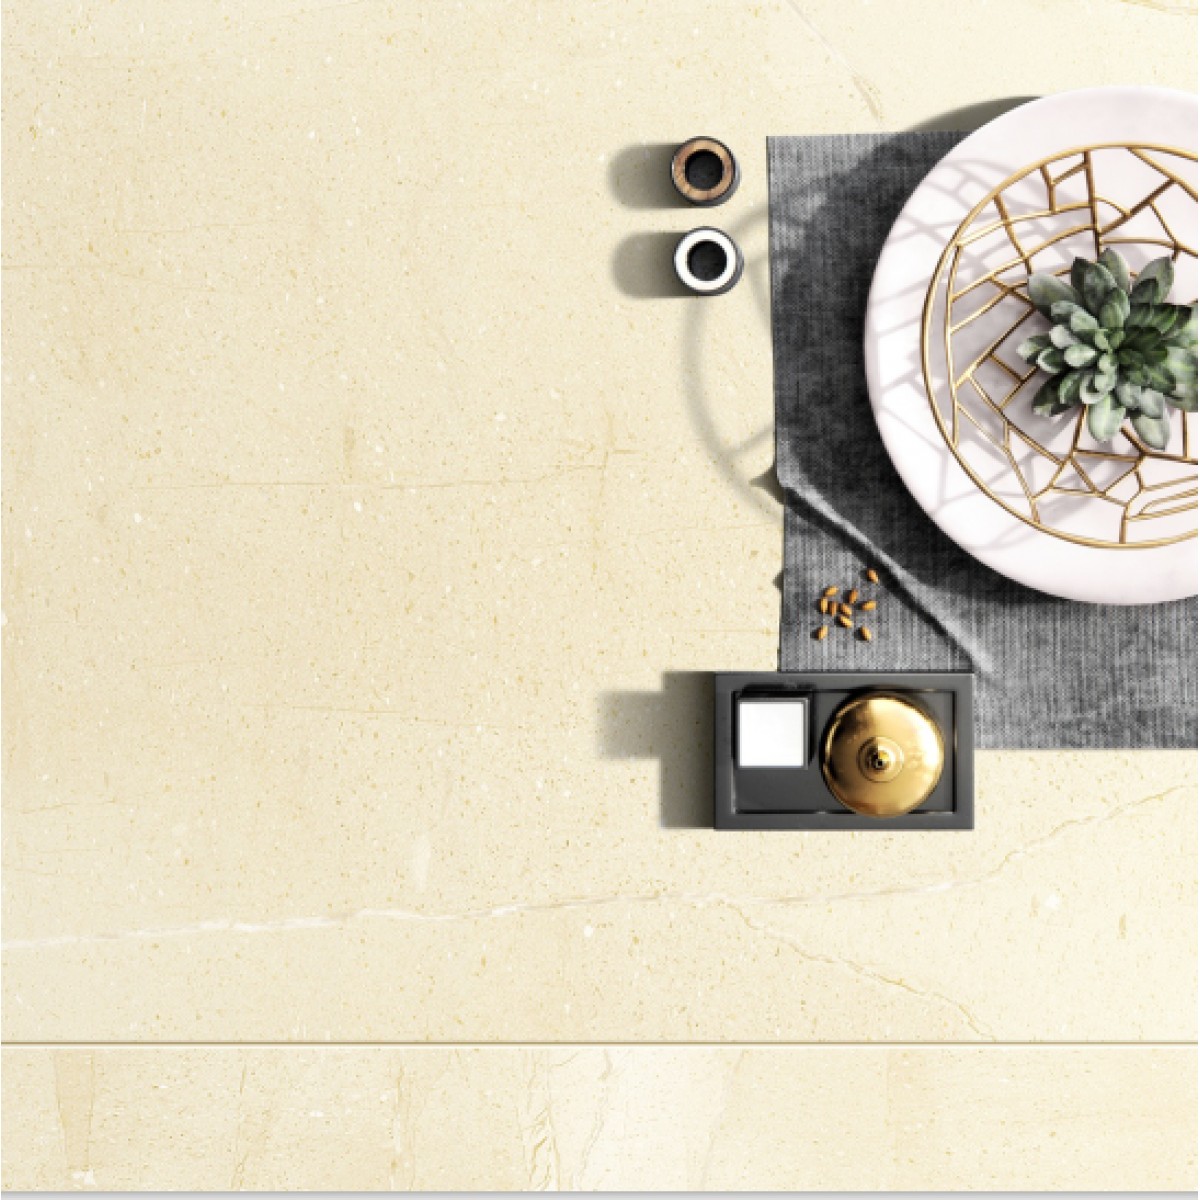 KITO金意陶瓷砖-糖果釉系列-水墨石韵 客厅餐厅墙砖地砖